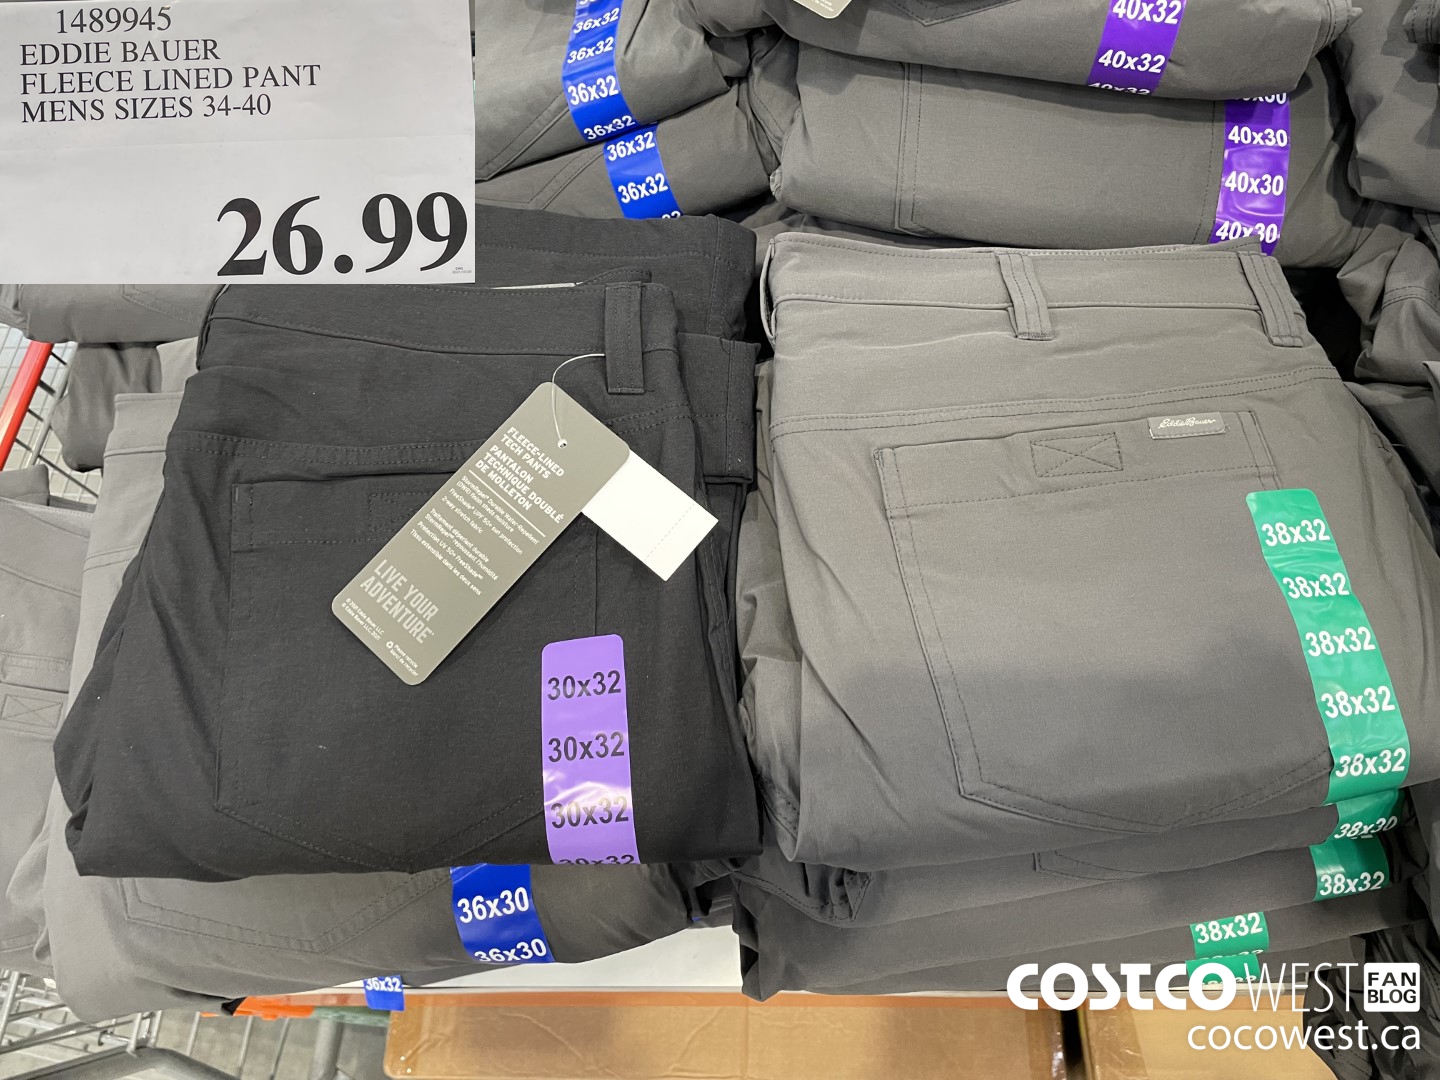 Costco Fall Aisle 2021 Superpost! Clothing, Jacket, Undergarments